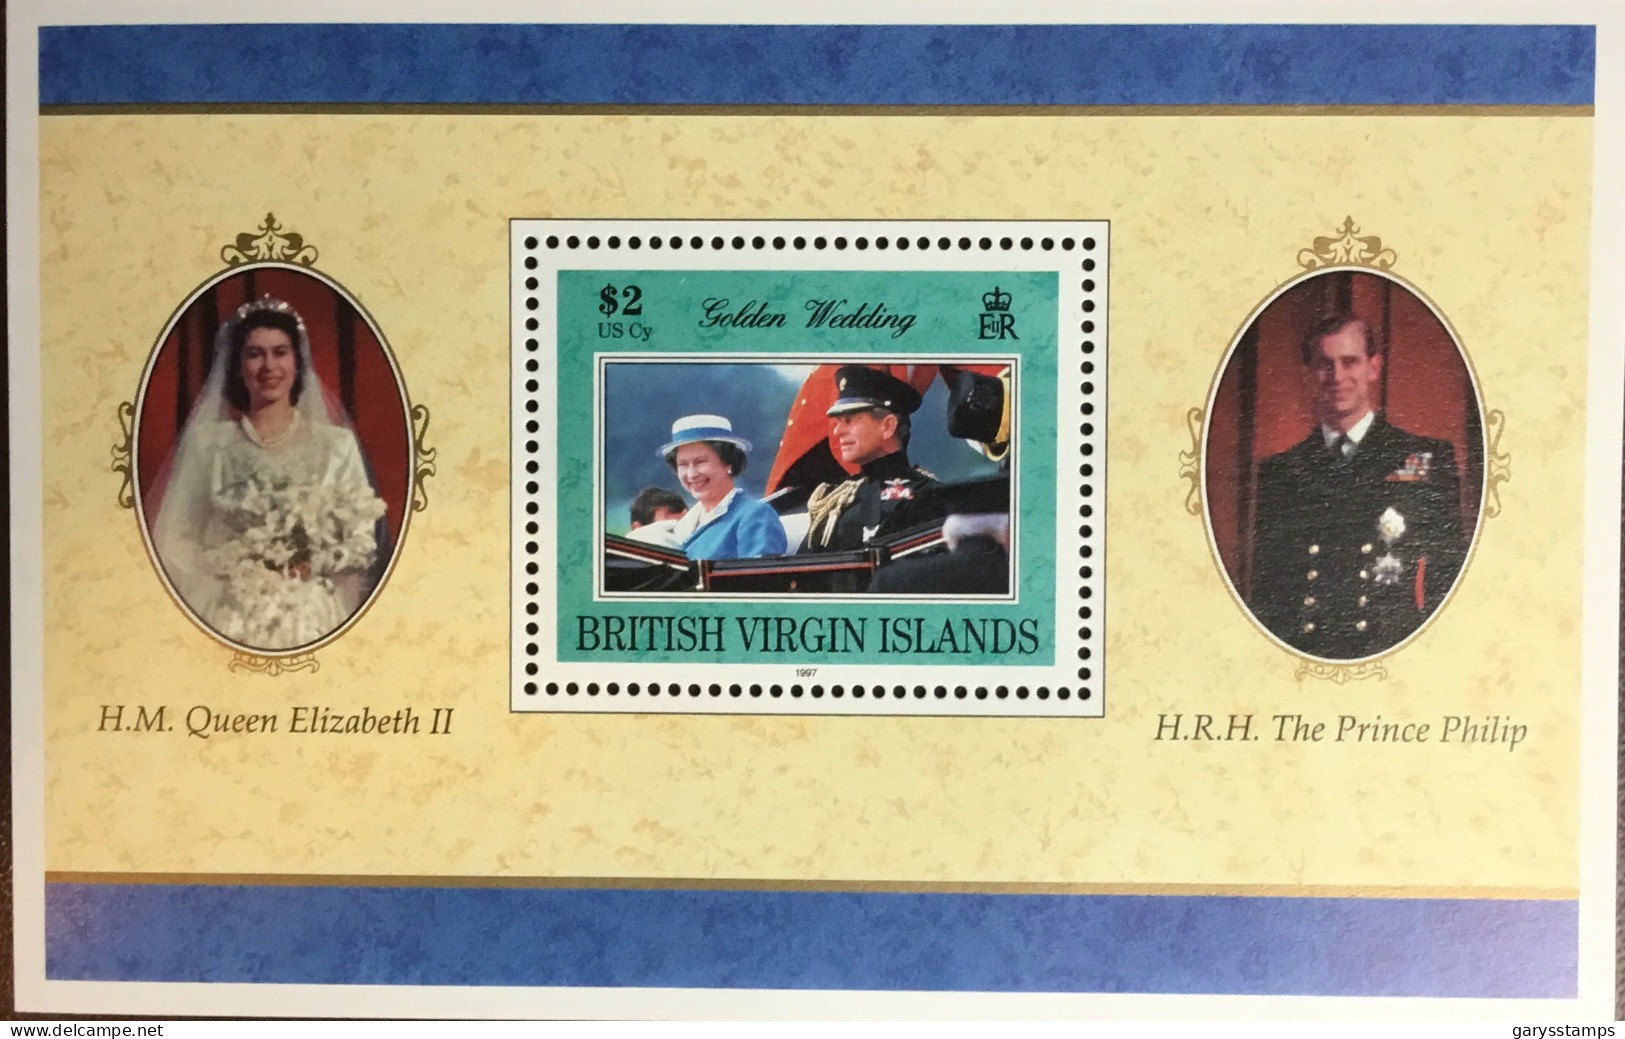 British Virgin Islands 1997 Golden Wedding Minisheet MNH - British Virgin Islands